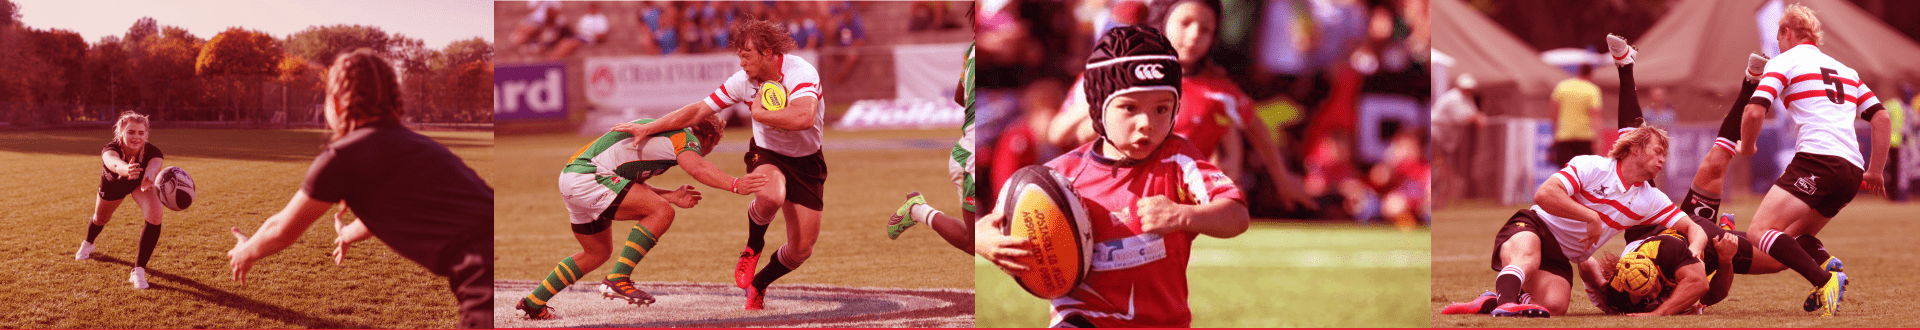 joueurs-de-rugby-equipes-hommes-femmes-enfants